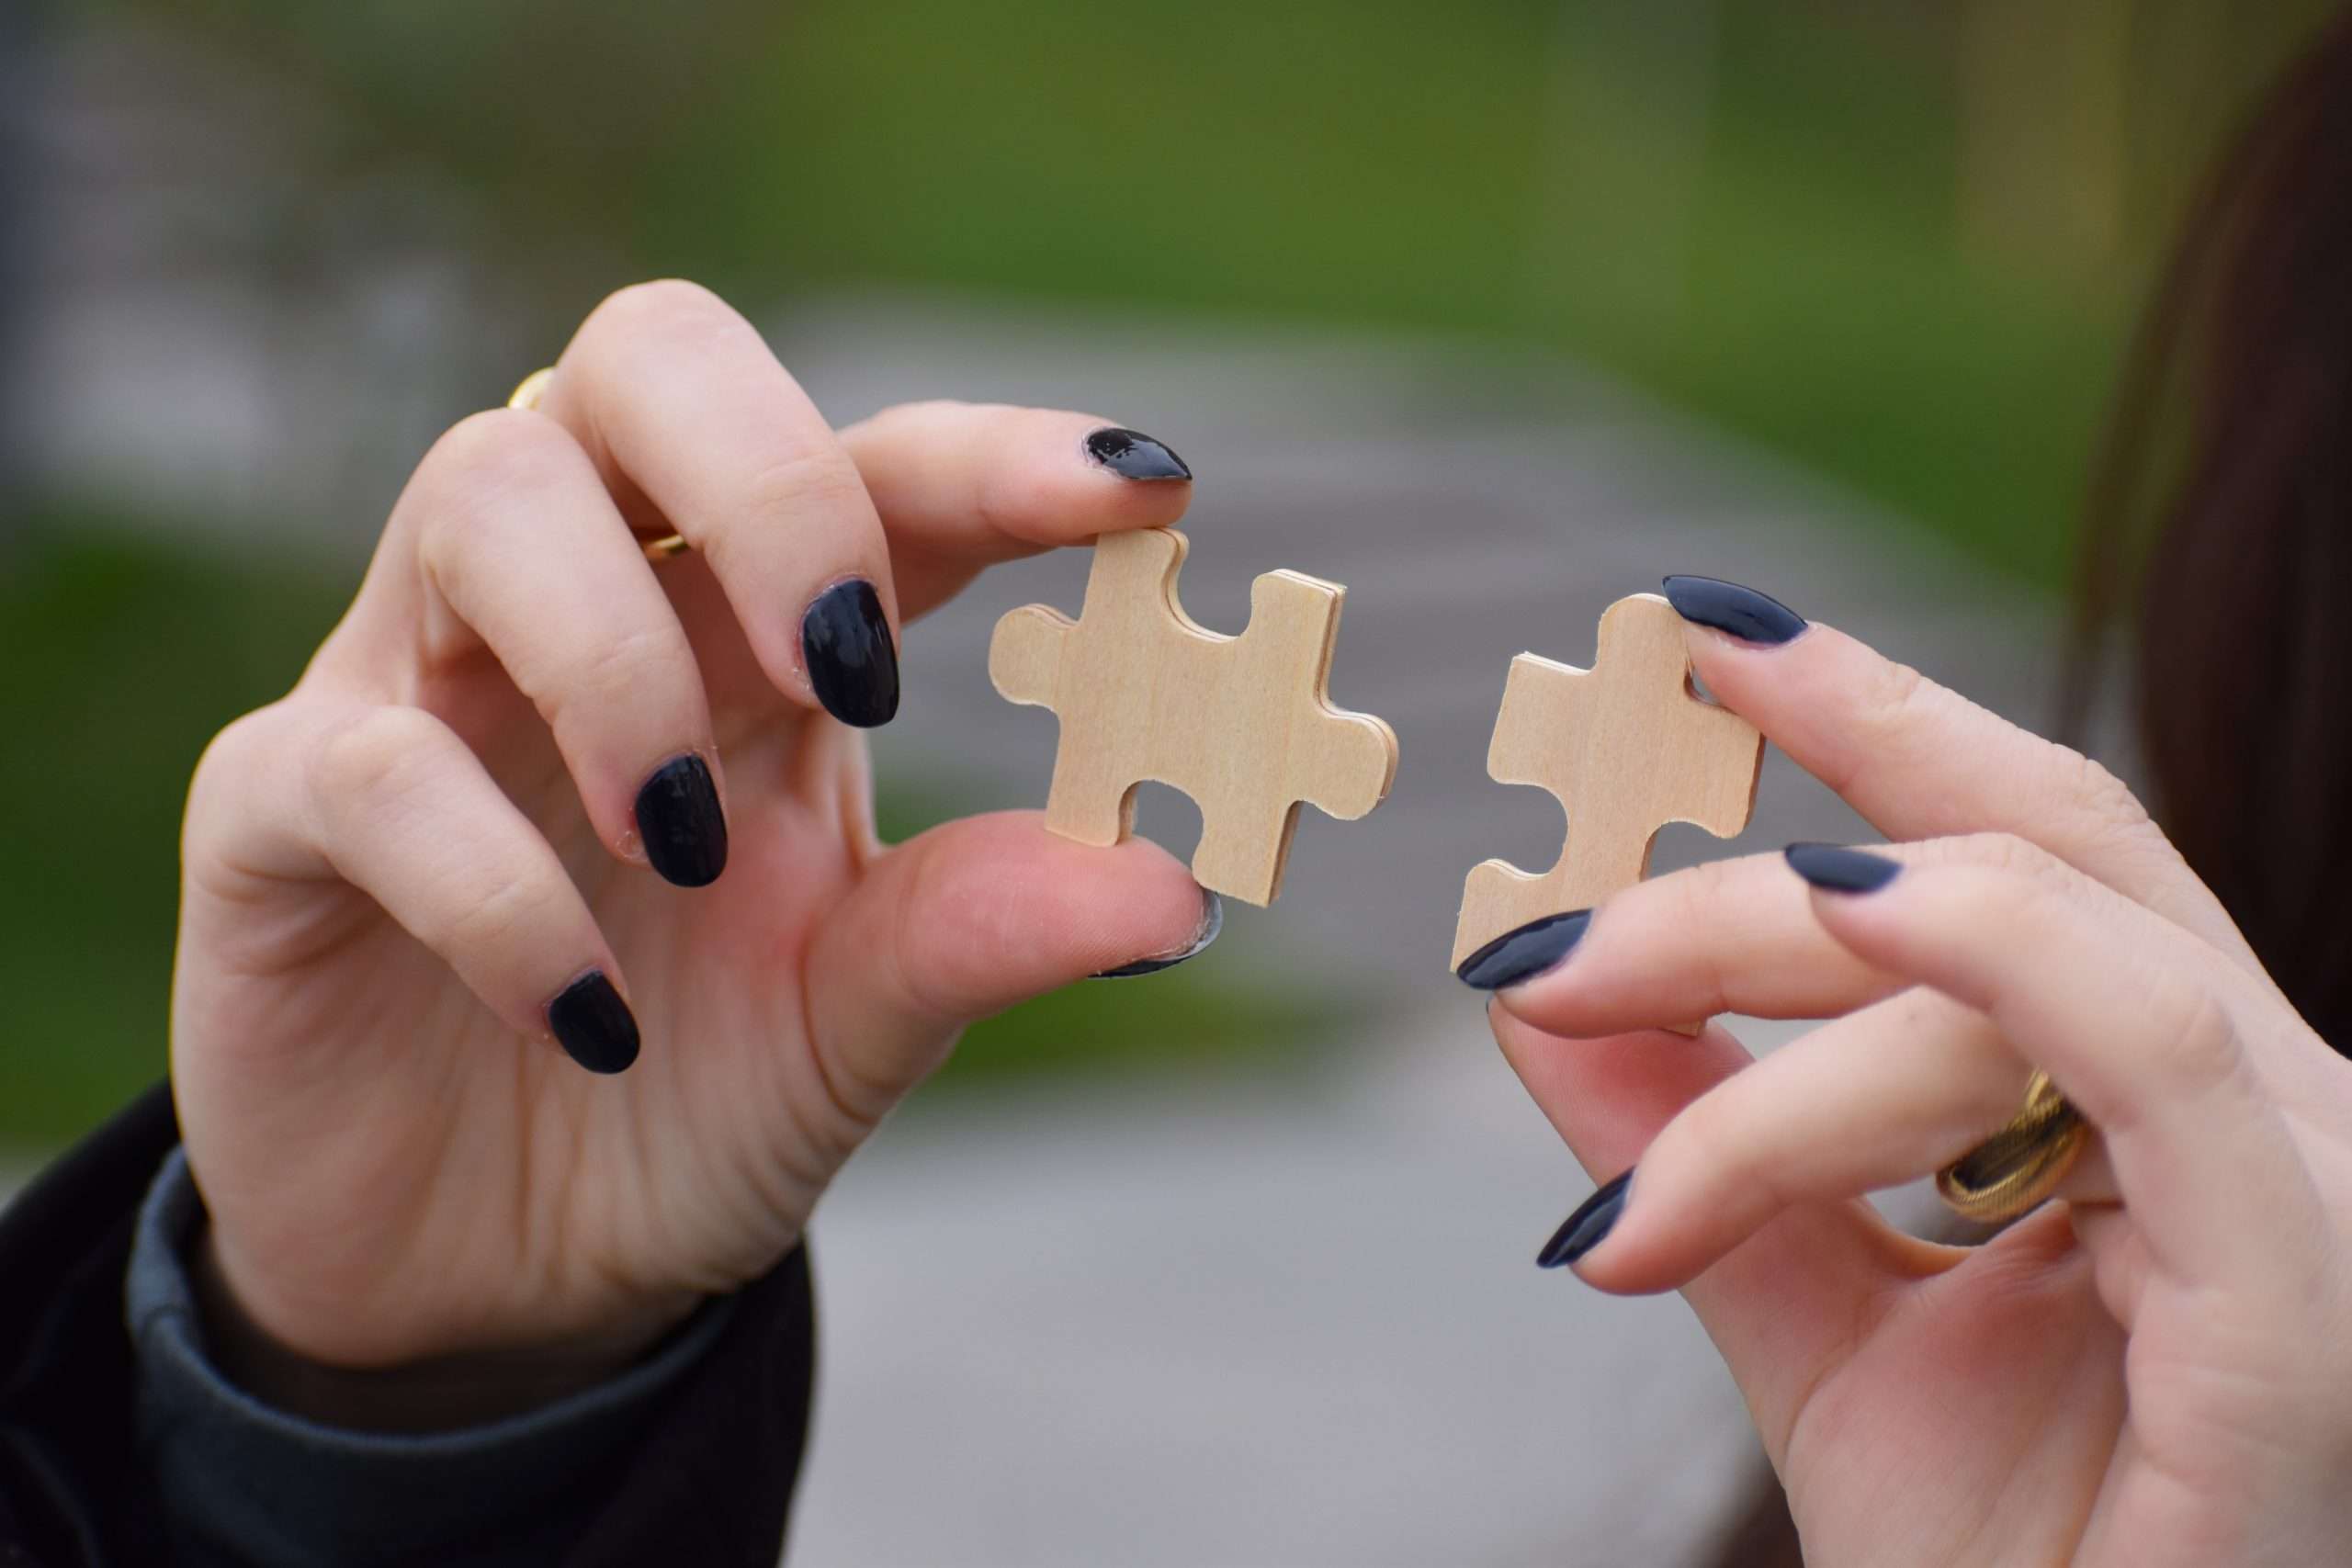 Hands connecting puzzle pieces, representing TMS versus ECT comparison.